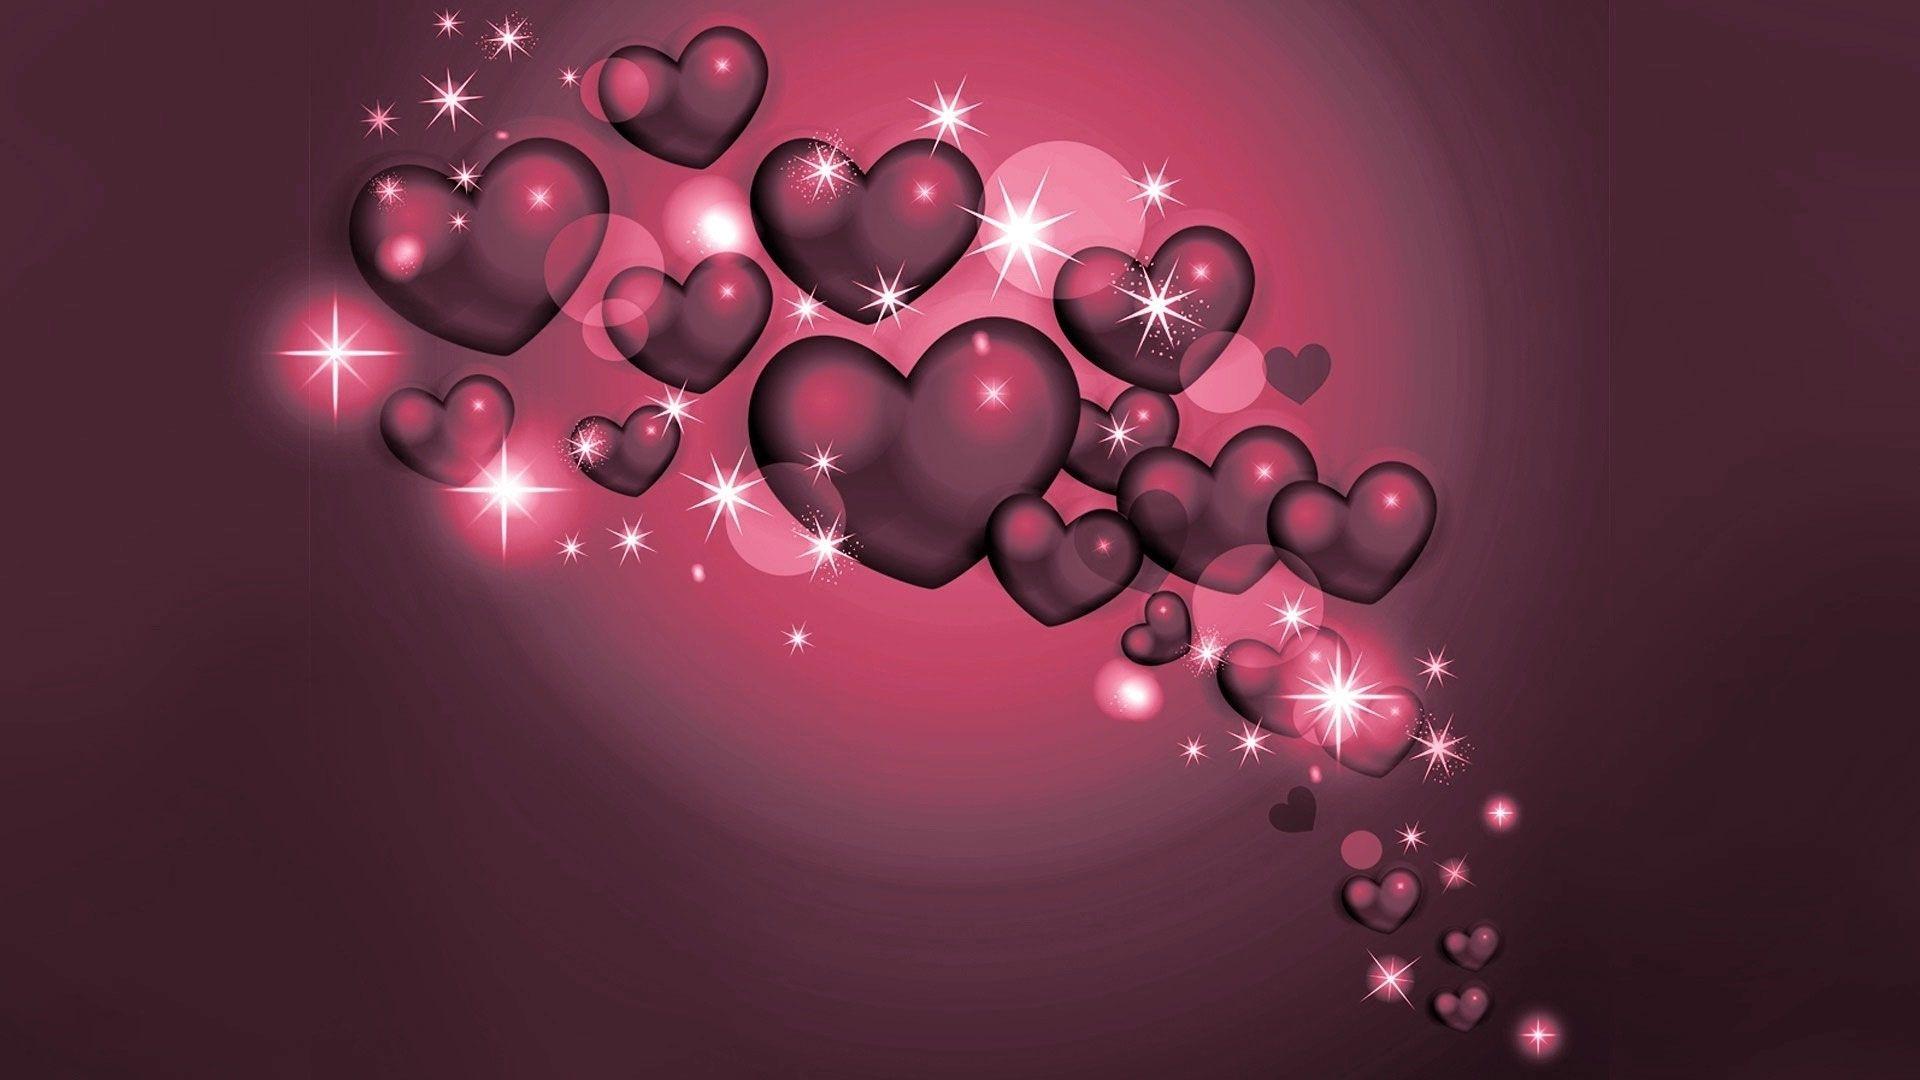 Top Cute Love Heart Wallpaper For Mobile FULL HD 1920×1080